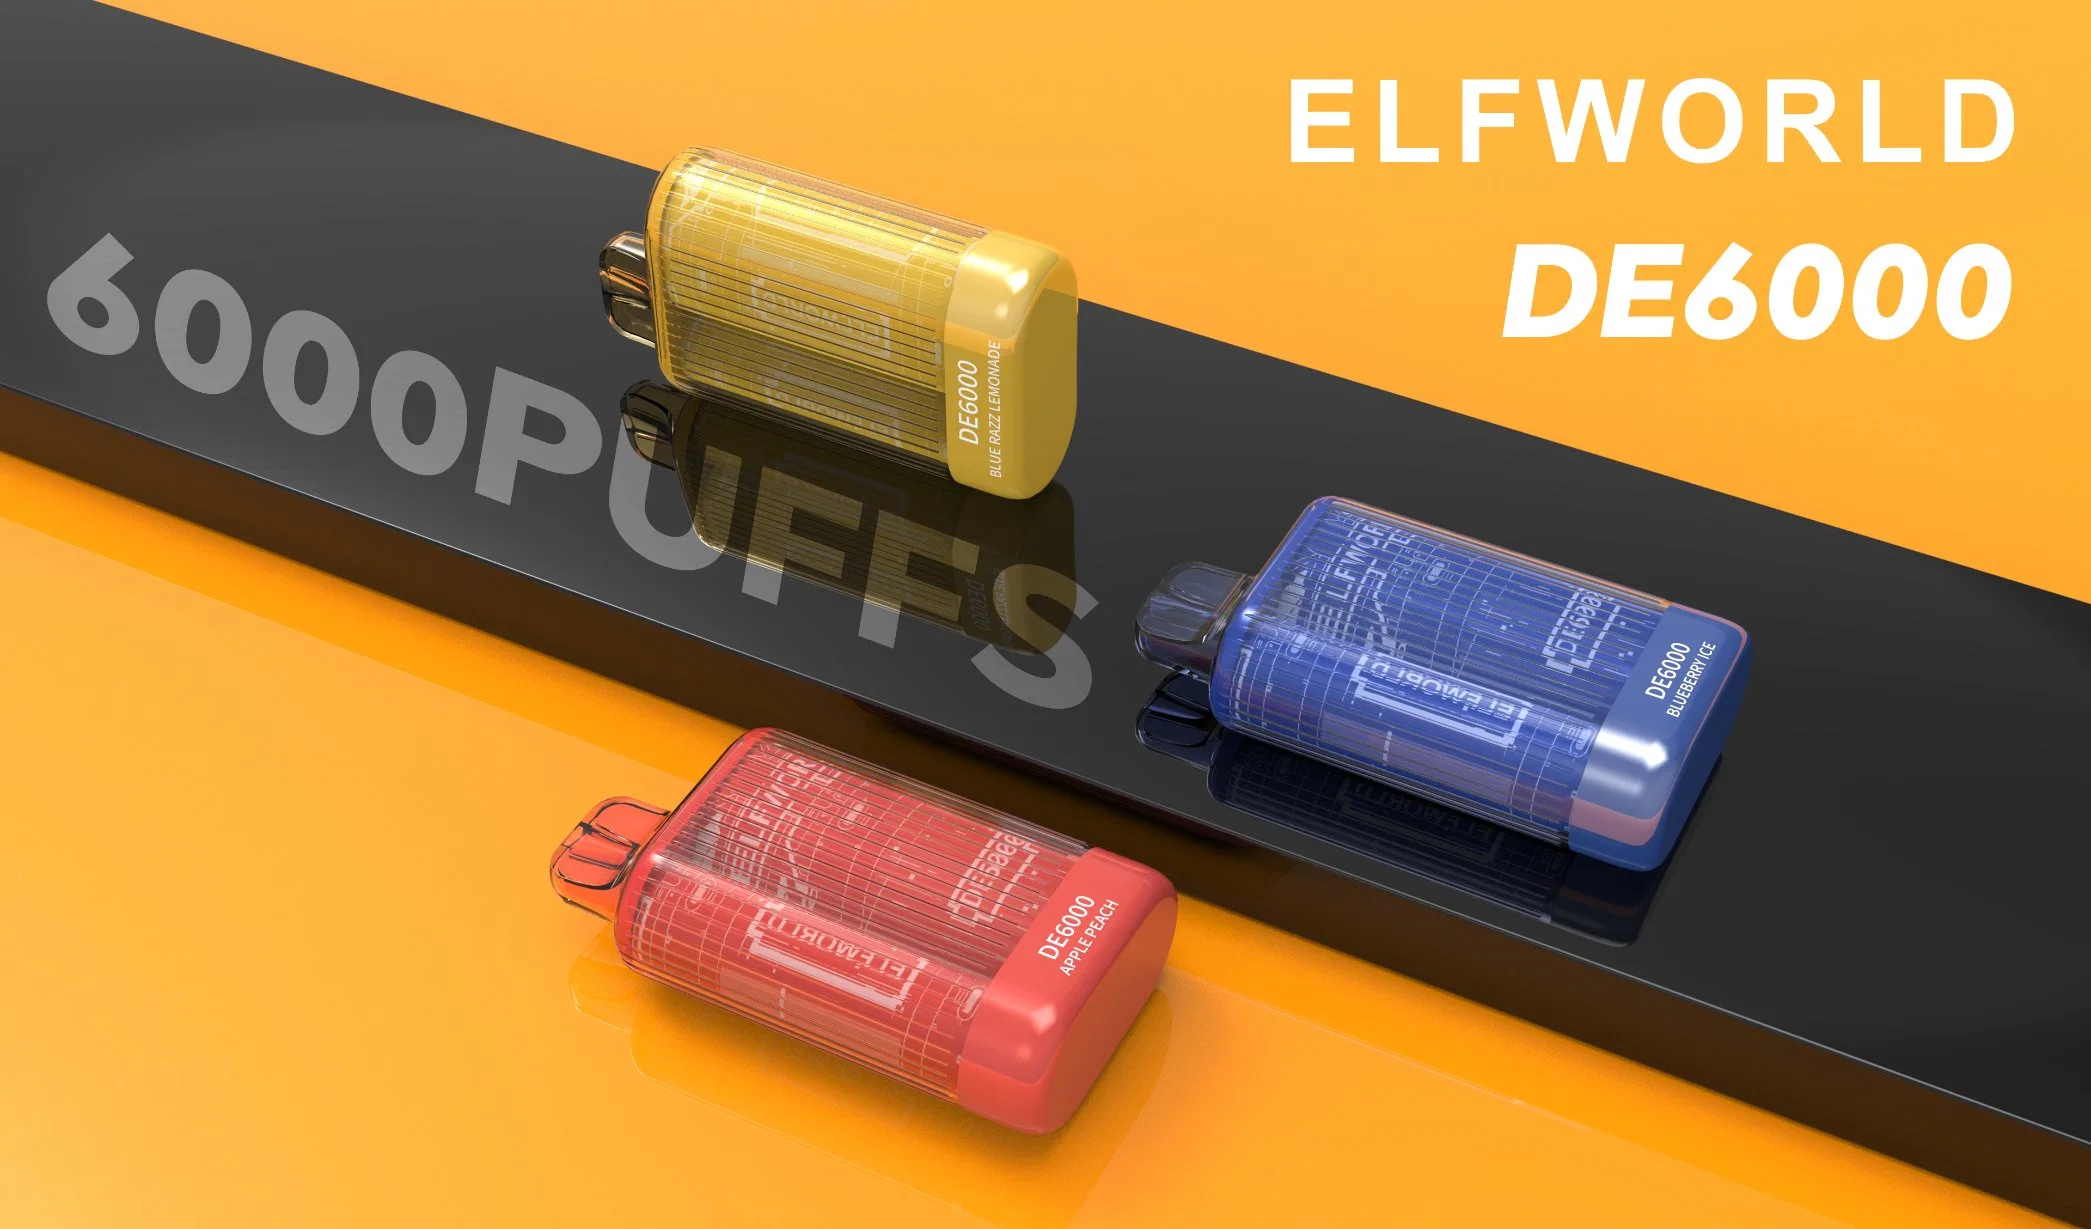 Elf original Mundo de 6000 TE5000 Elfworld 6000 Puff batería recargable del cigarrillo electrónico de la bobina de malla de 5% 2% 0% de la barra de Vape desechables